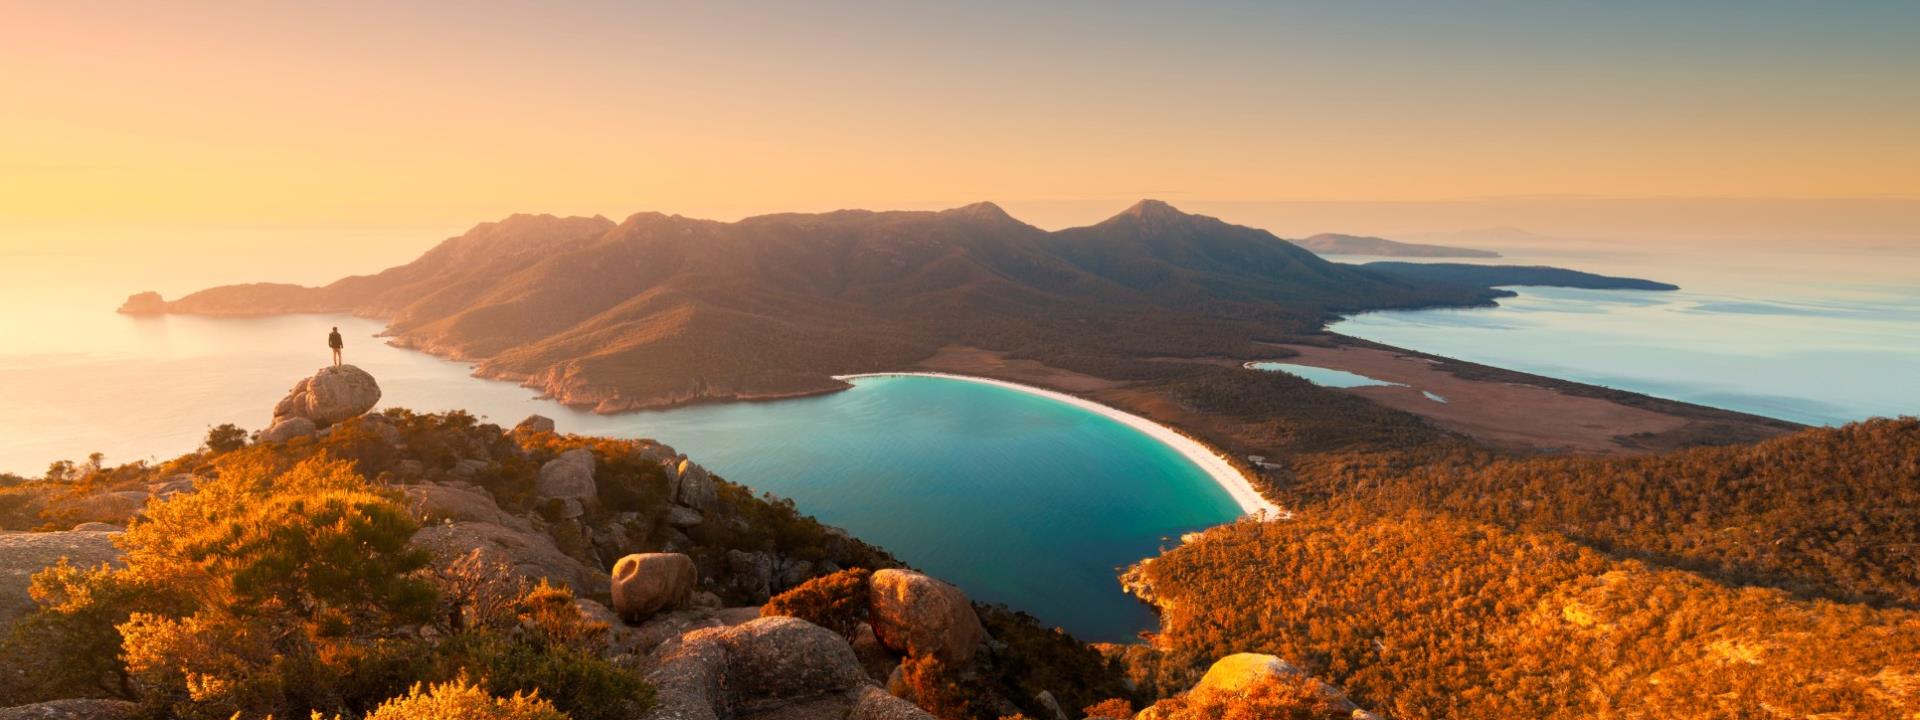 Credits Tourism Tasmania - Matt Donovan